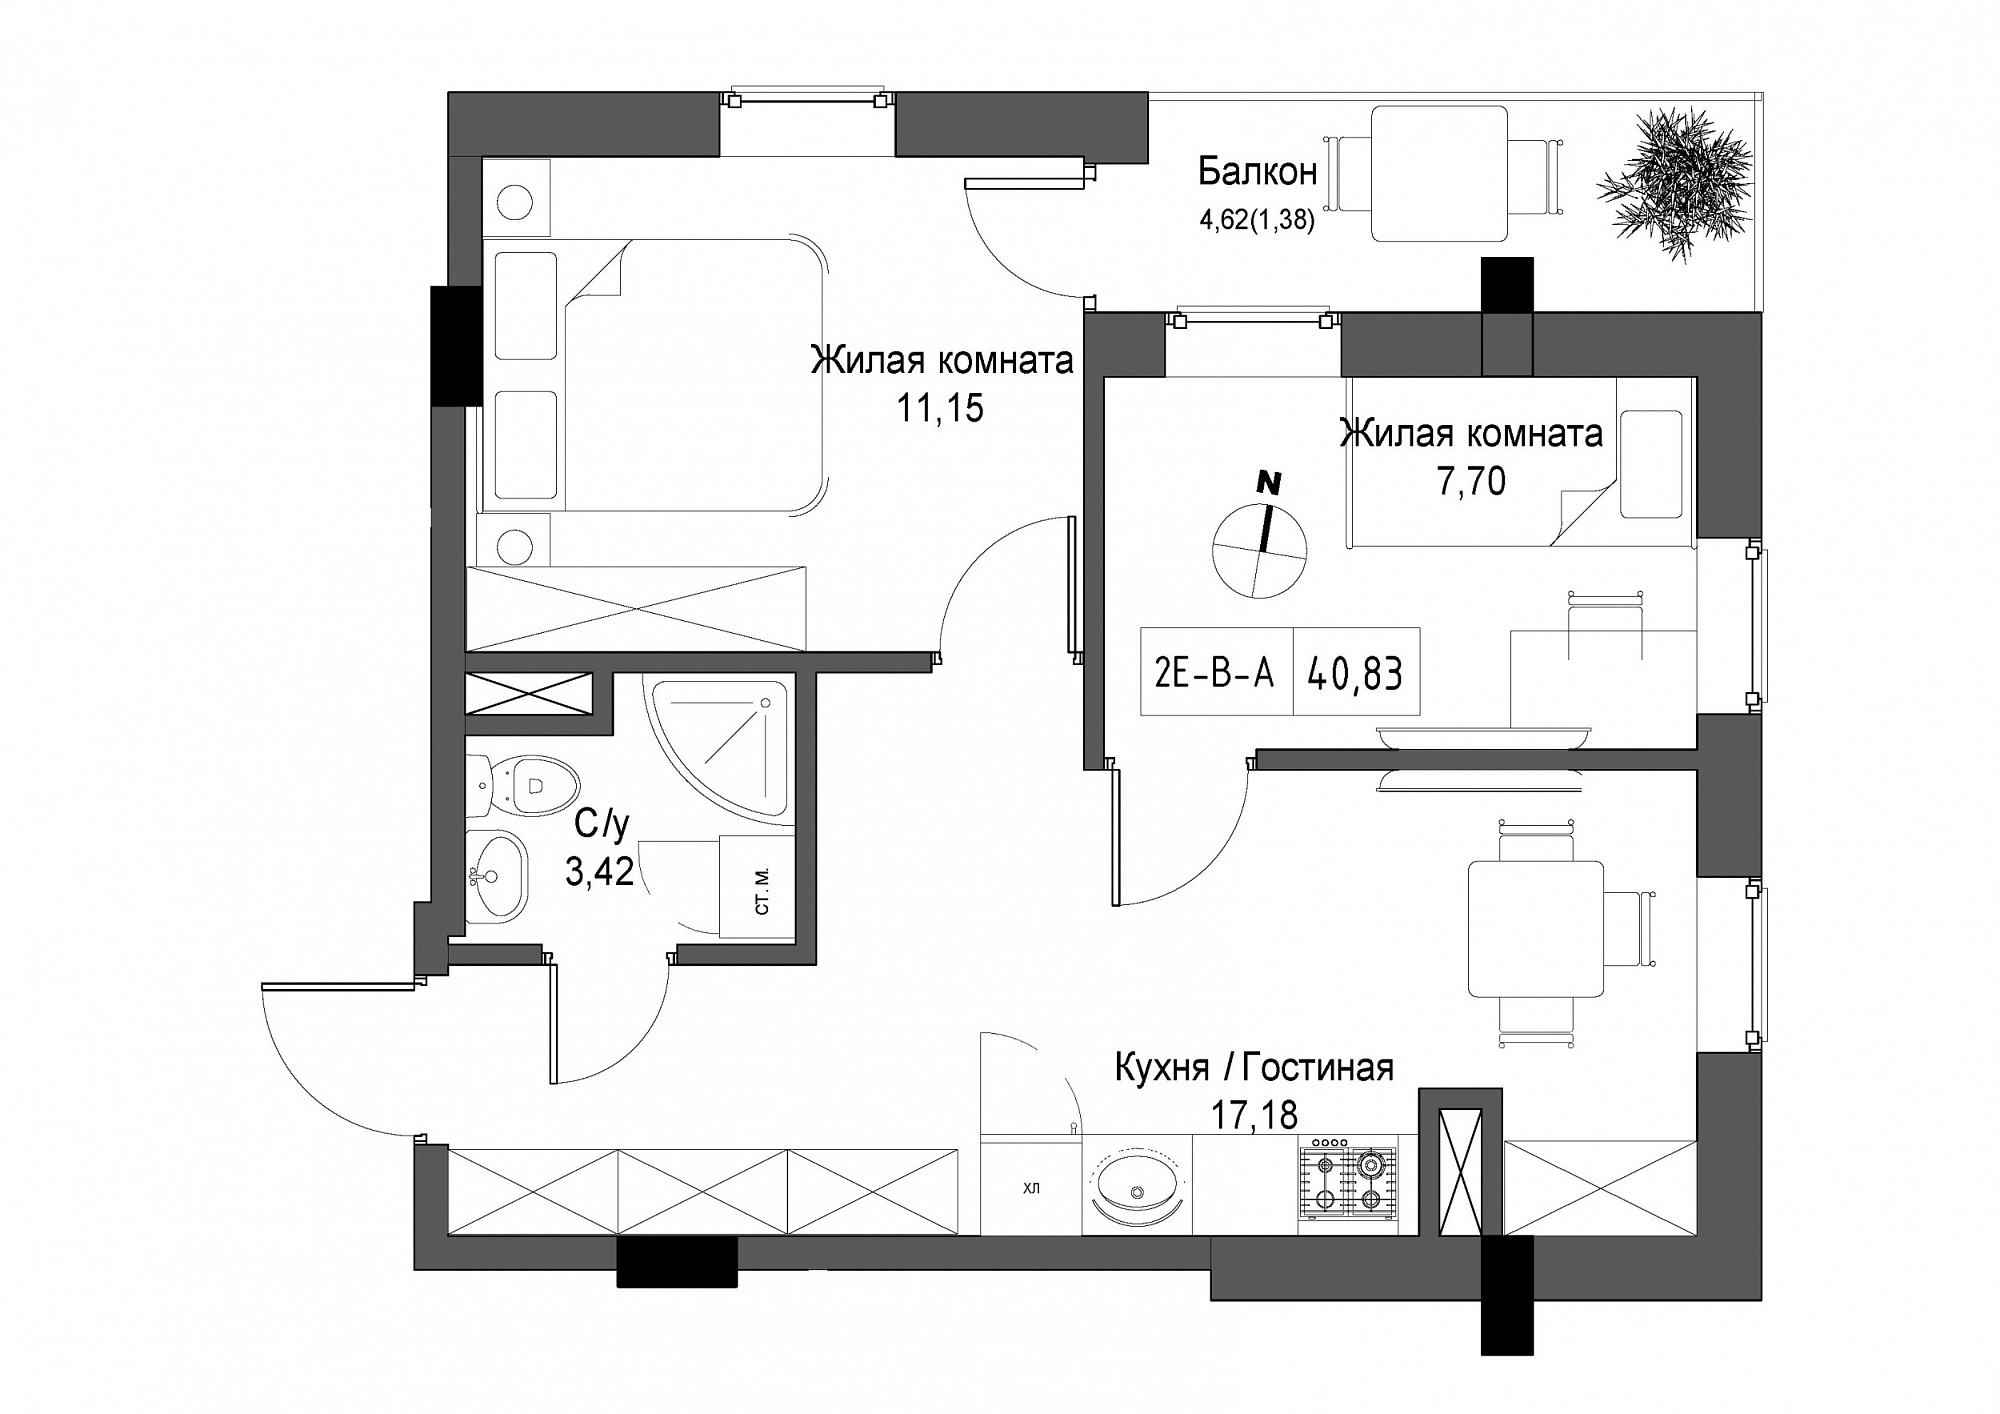 Планування 2-к квартира площею 40.83м2, UM-004-08/0005.